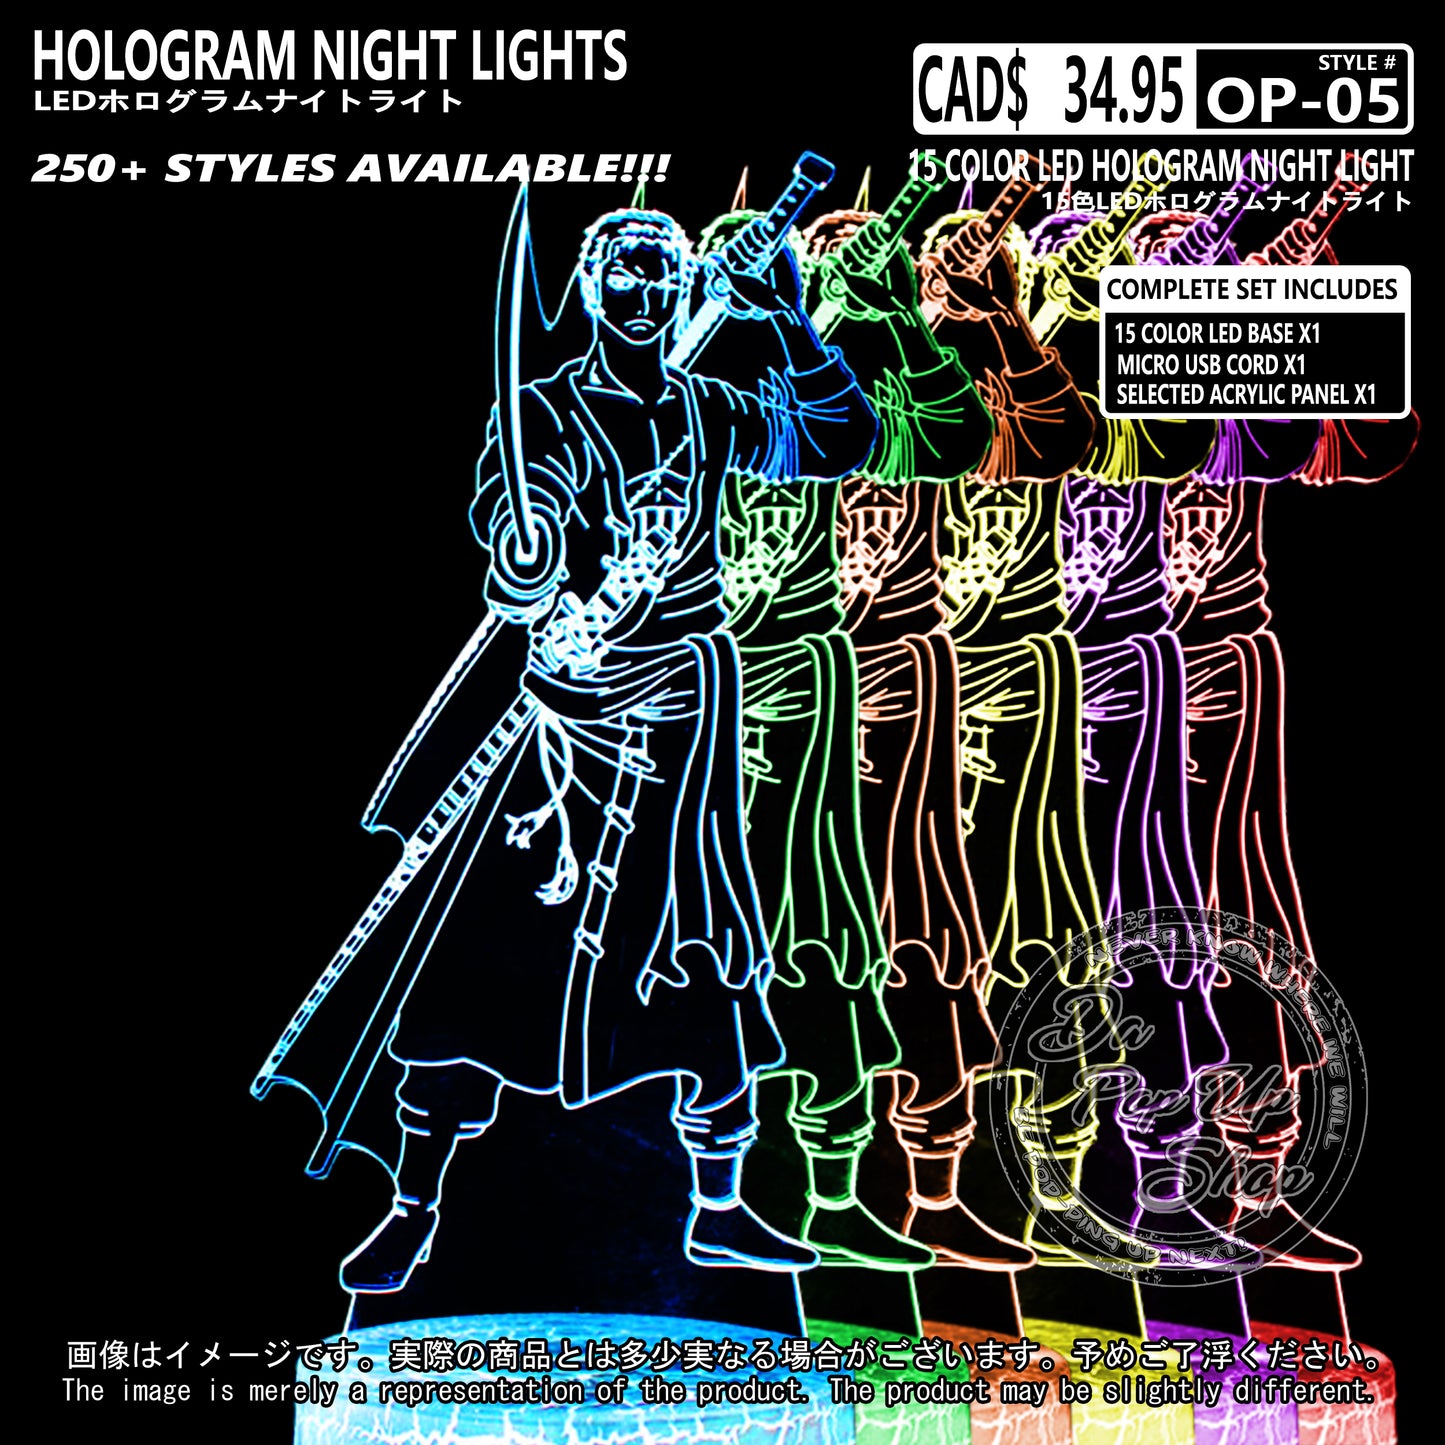 (OP-05) One Piece Hologram LED Night Light